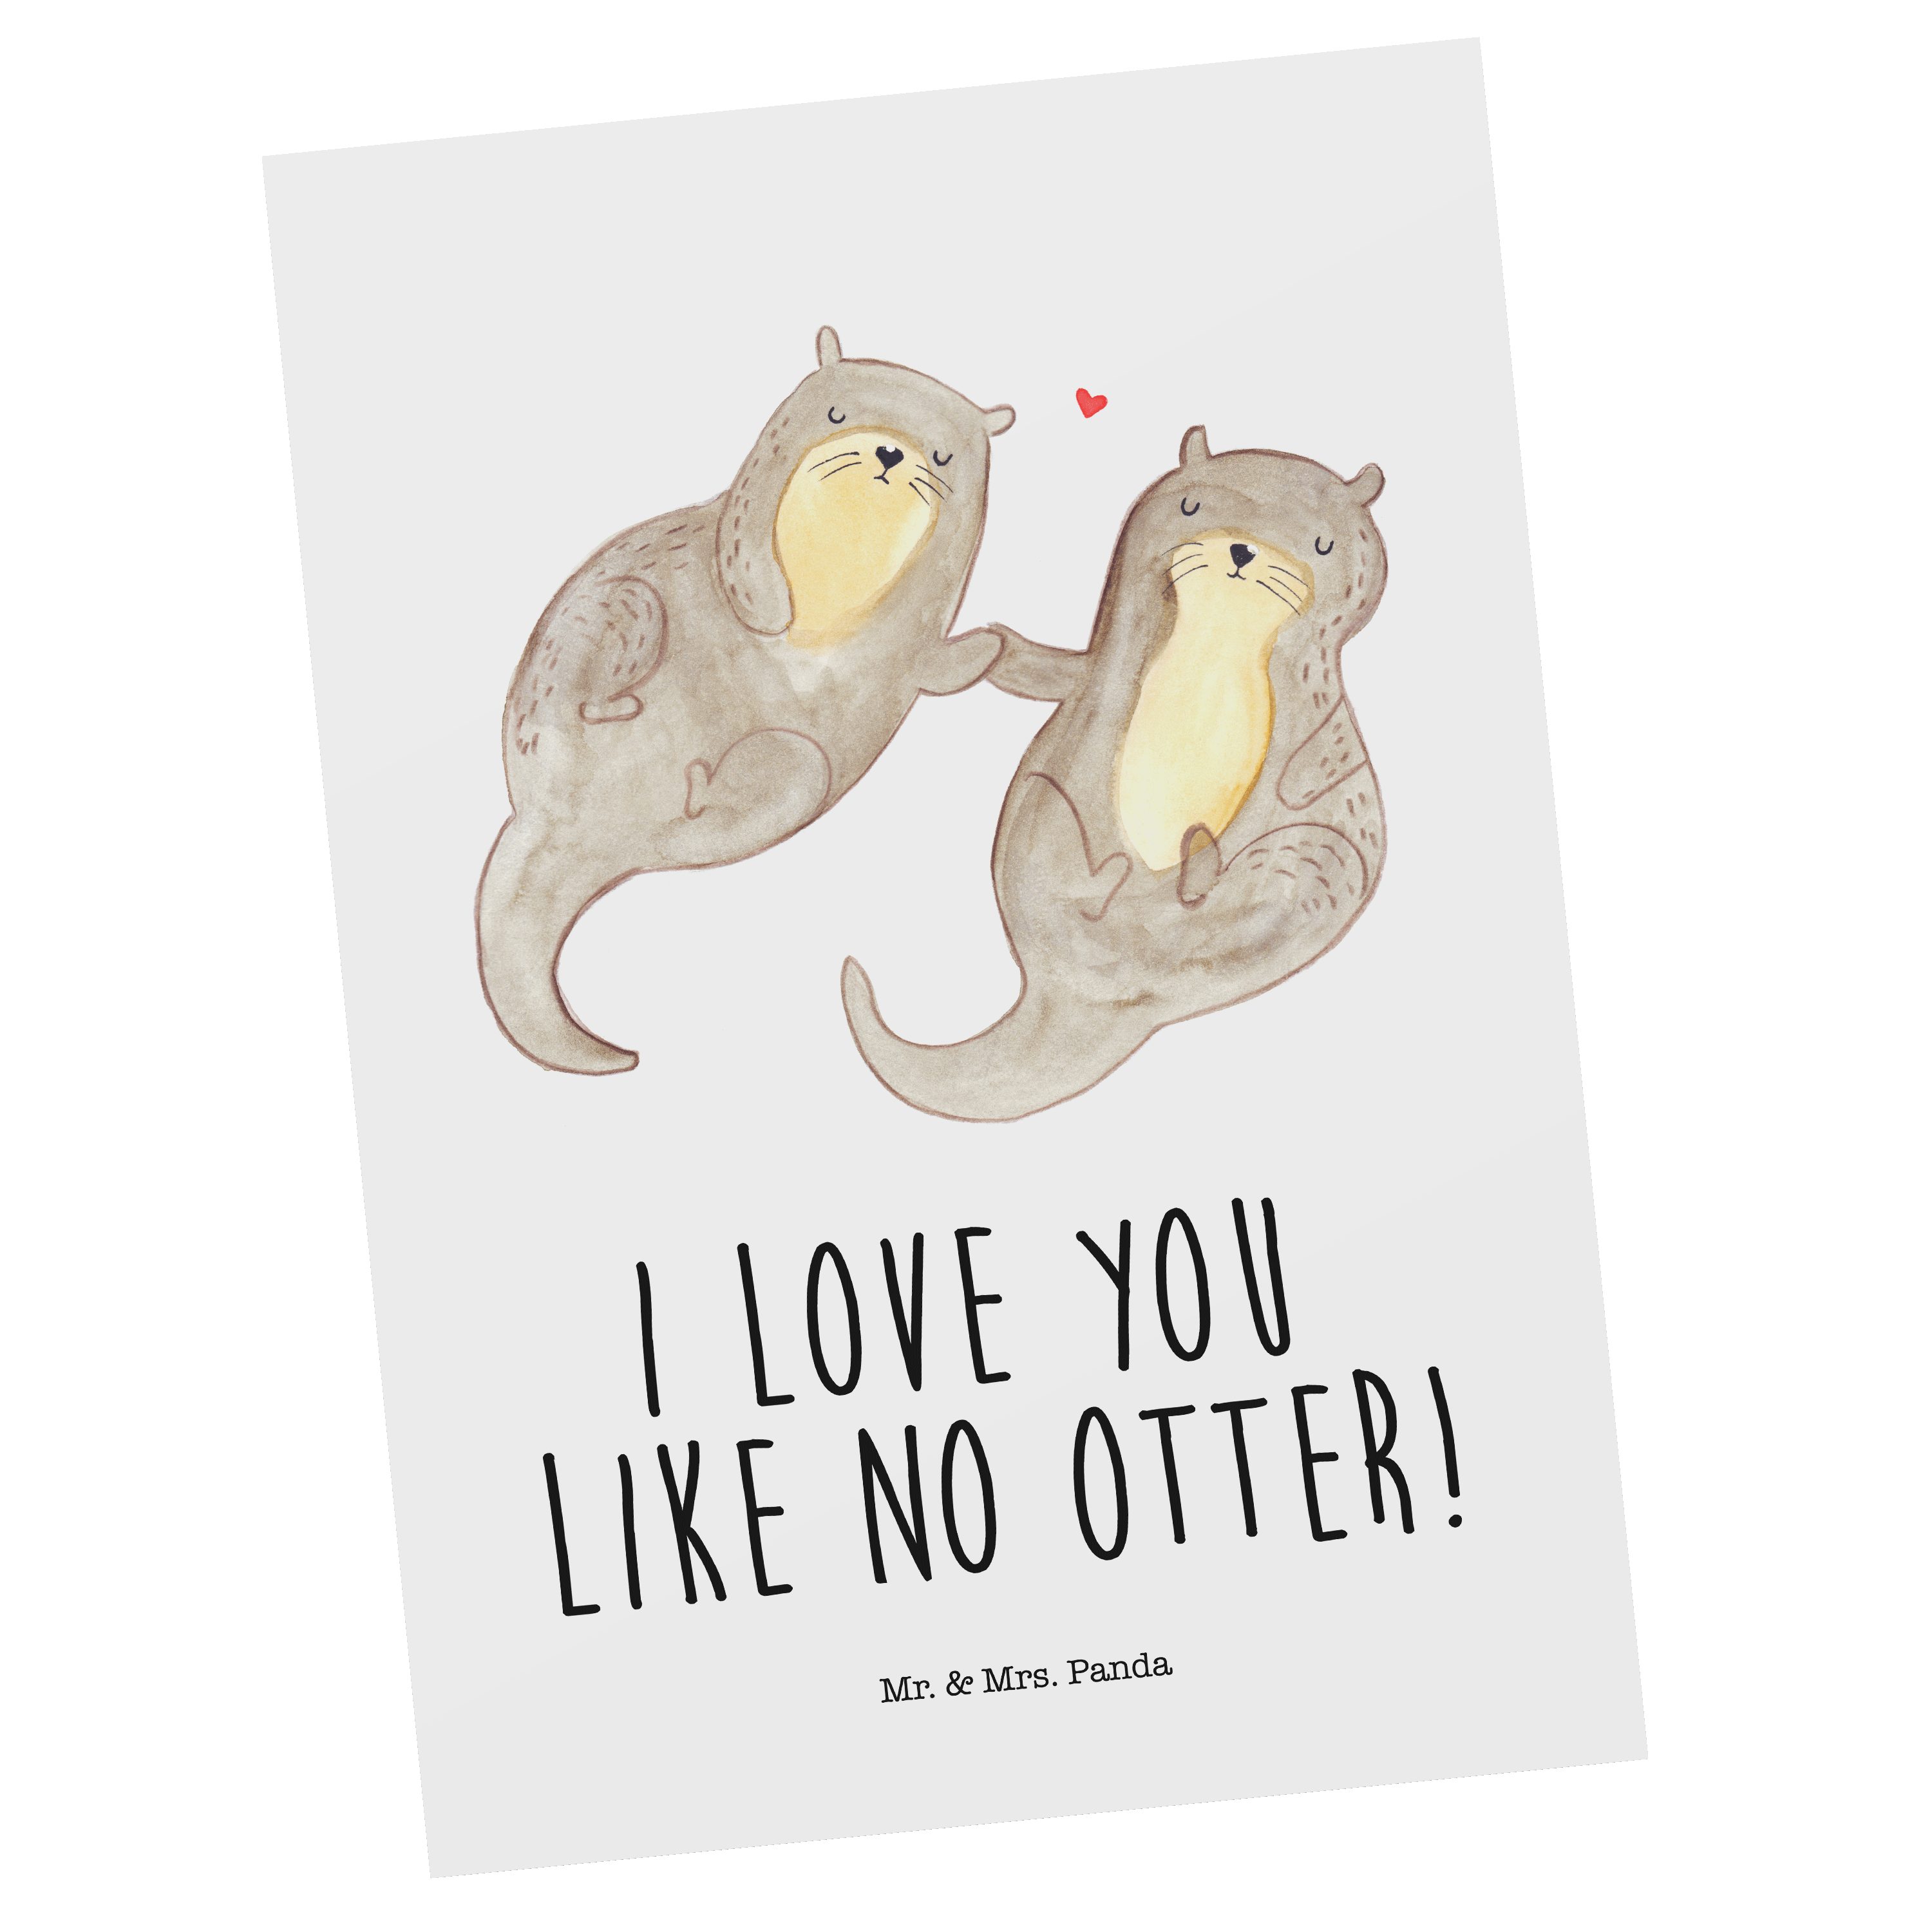 Mr. & Mrs. Panda Postkarte Otter händchenhaltend - Weiß - Geschenk, Seeotter, Fischotter, Geburt